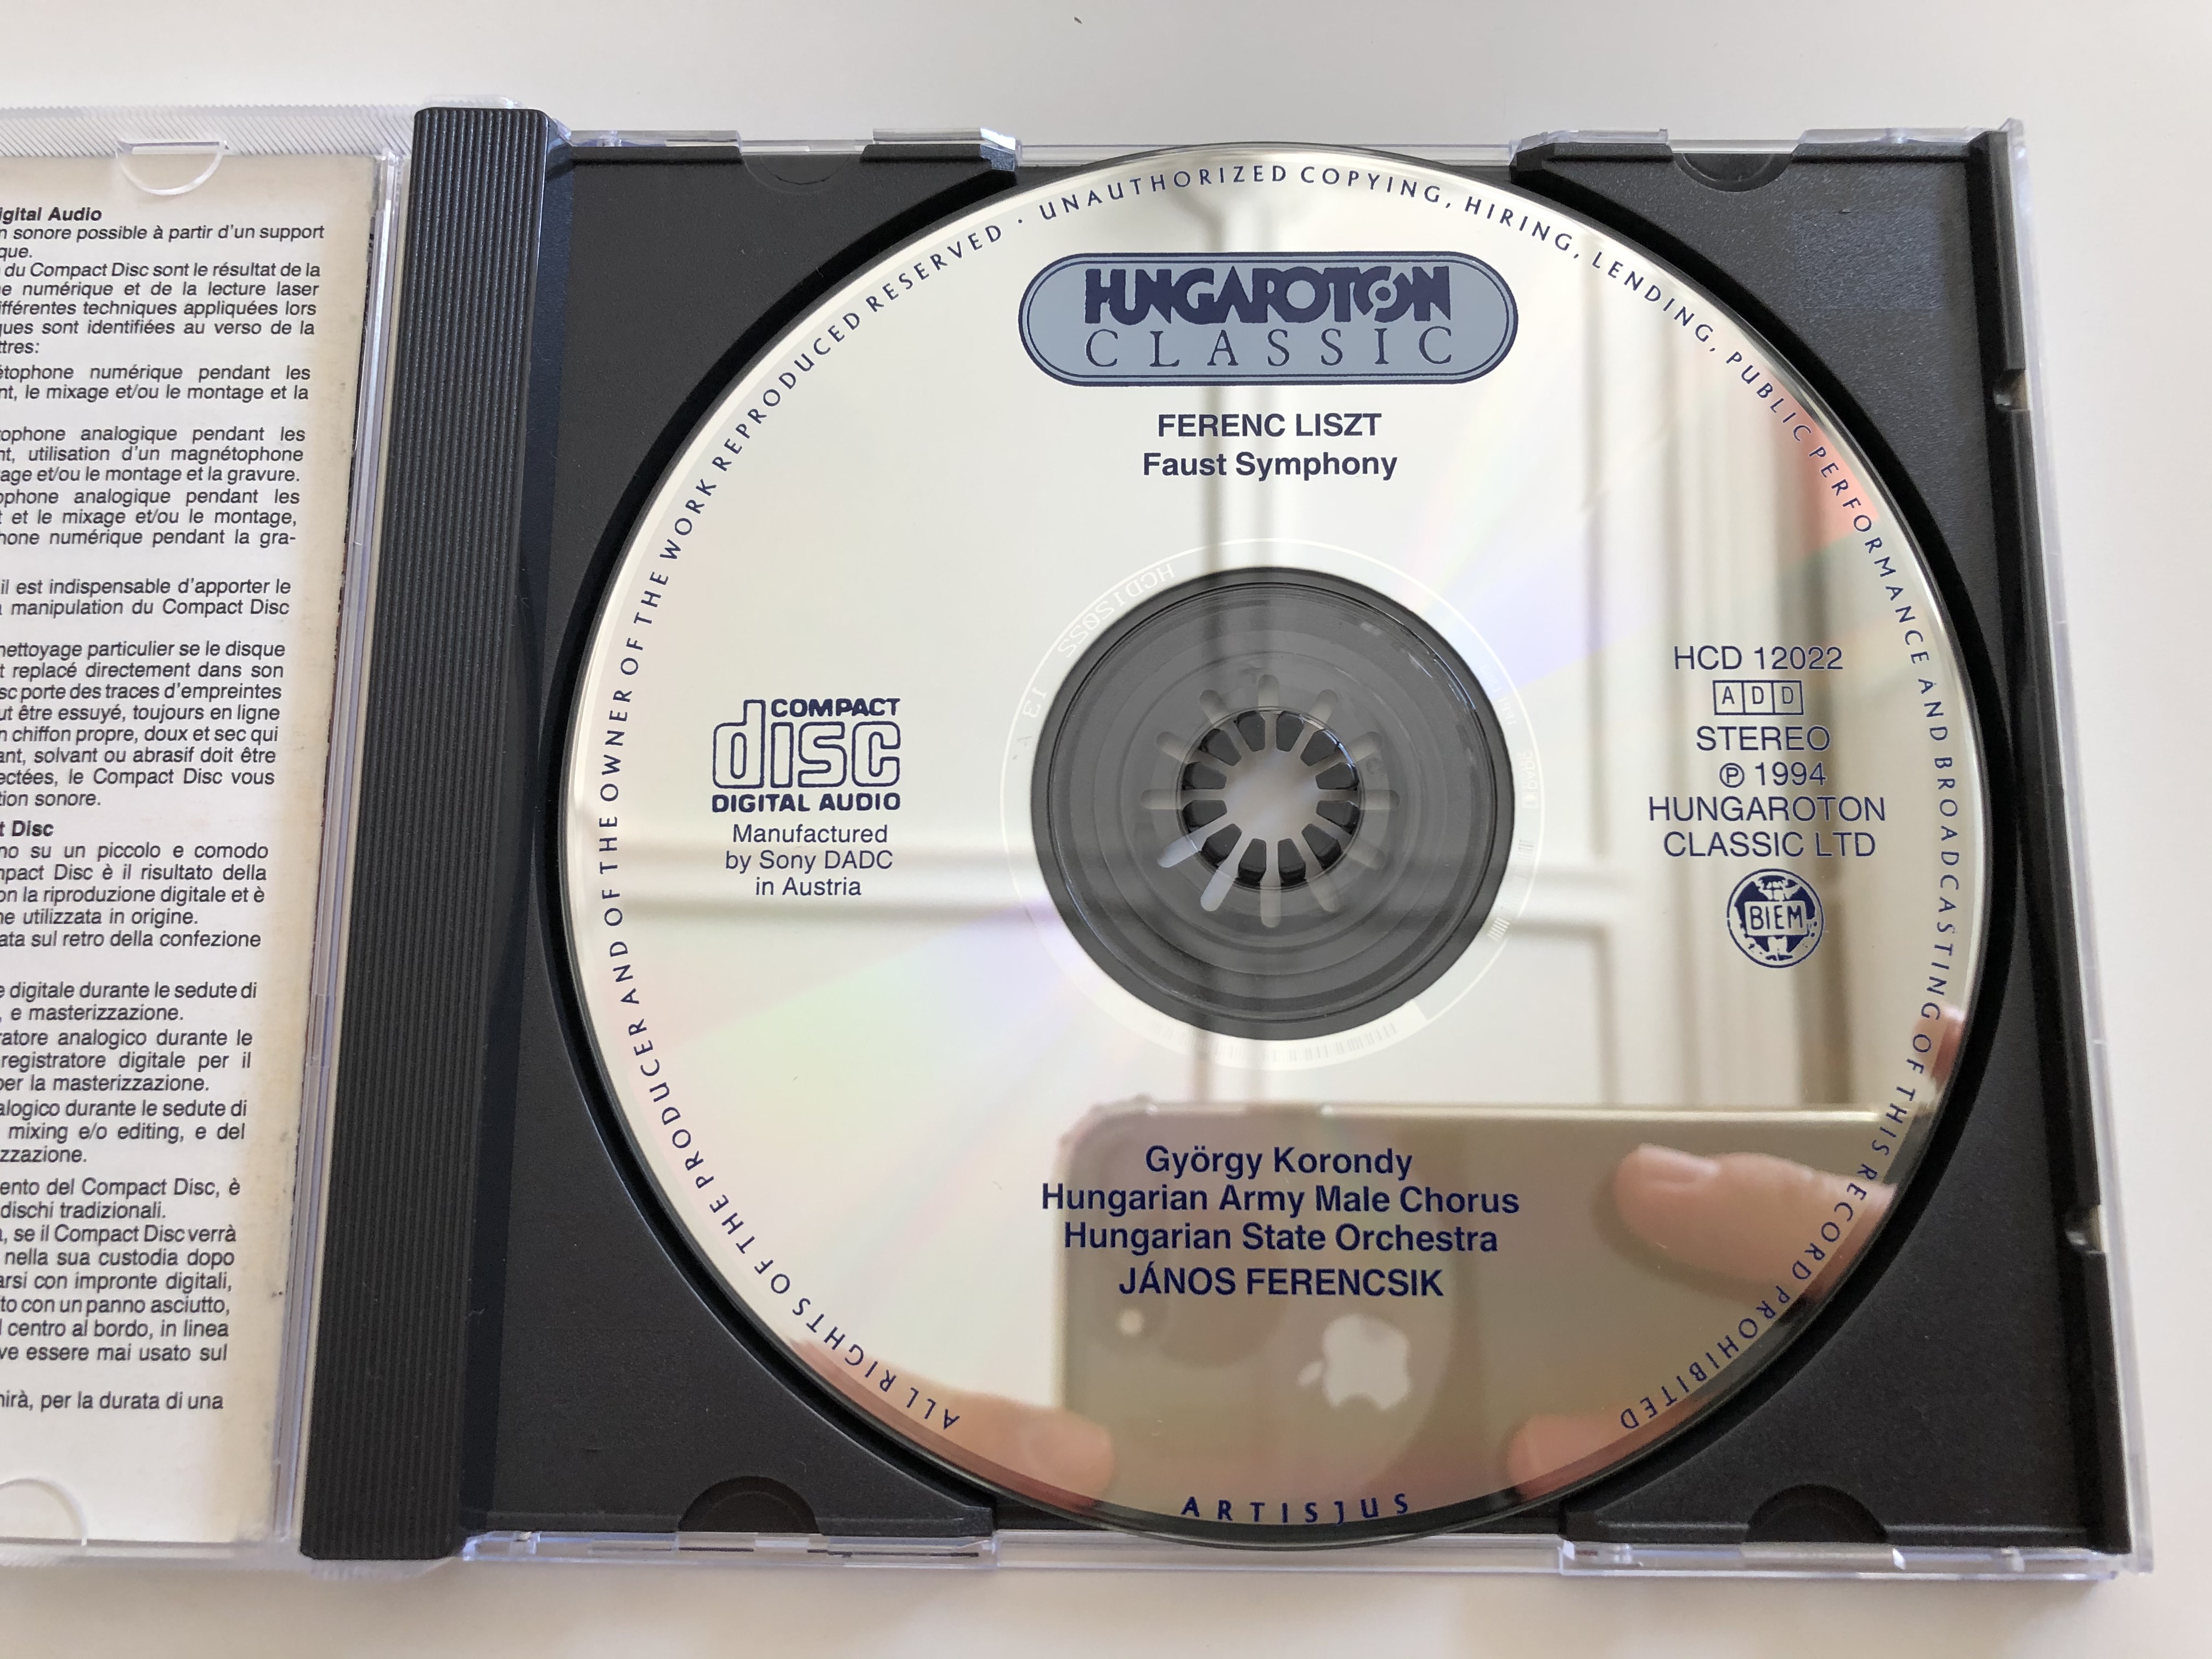 liszt-ferenc-faust-symphony-gyorgy-korondy-hungarian-state-orchestra-janos-ferencsik-hungaroton-classic-audio-cd-1994-stereo-hcd-12022-2-6-.jpg